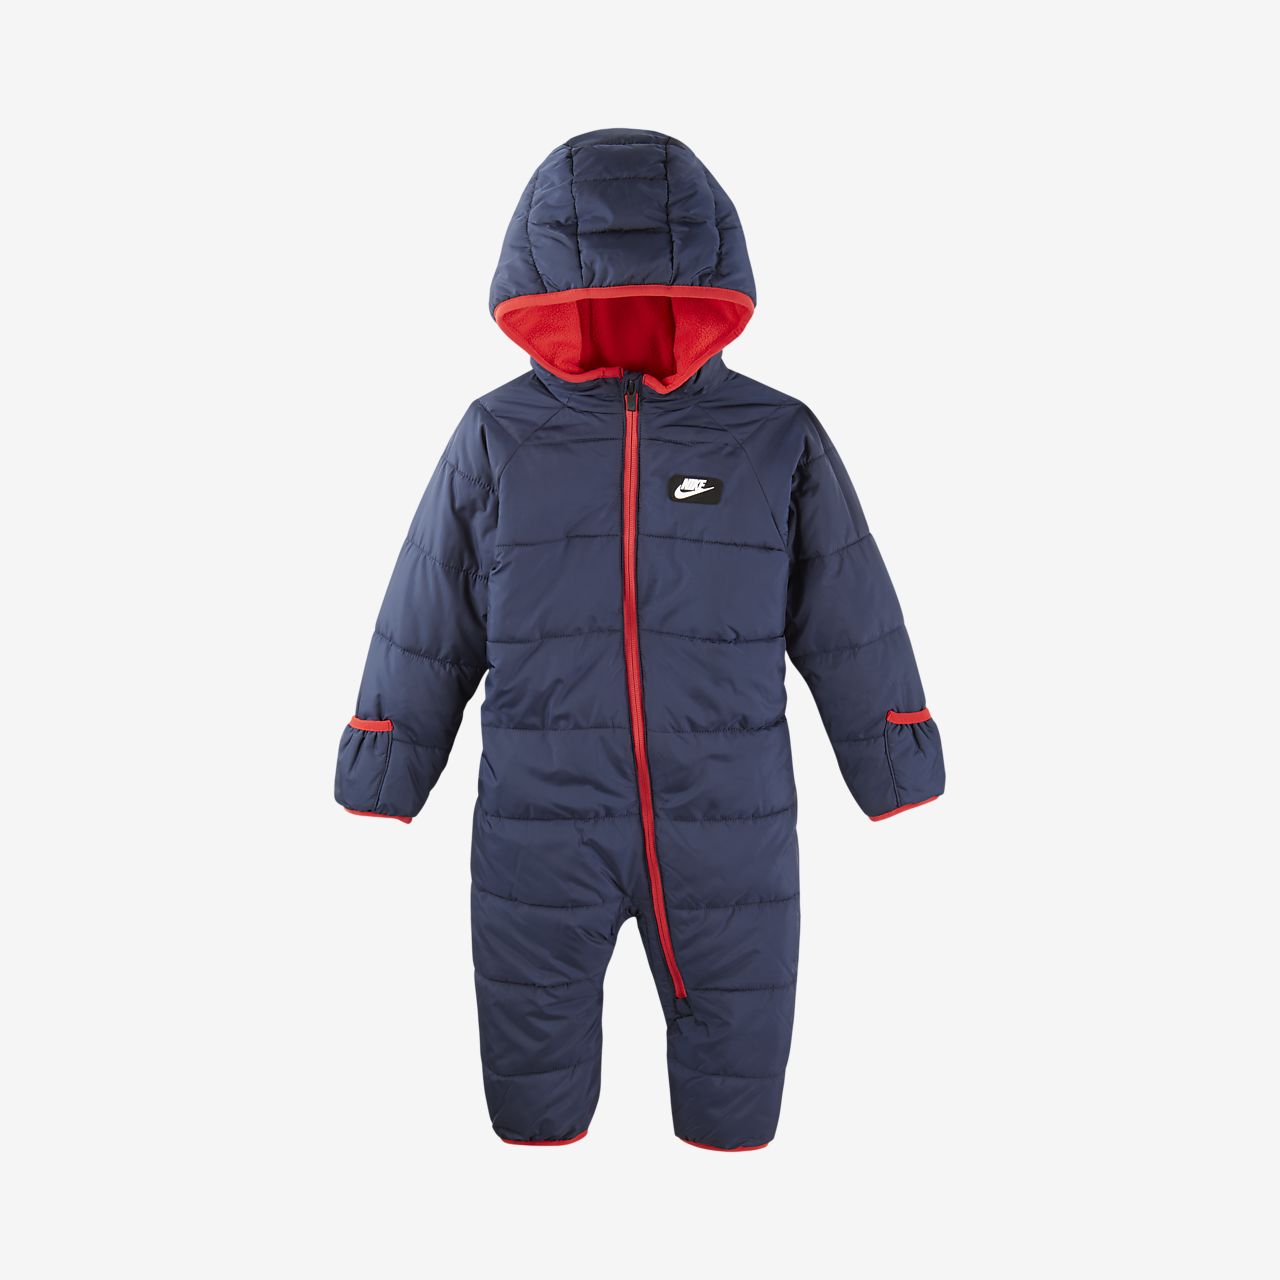 nike snowsuit for infants